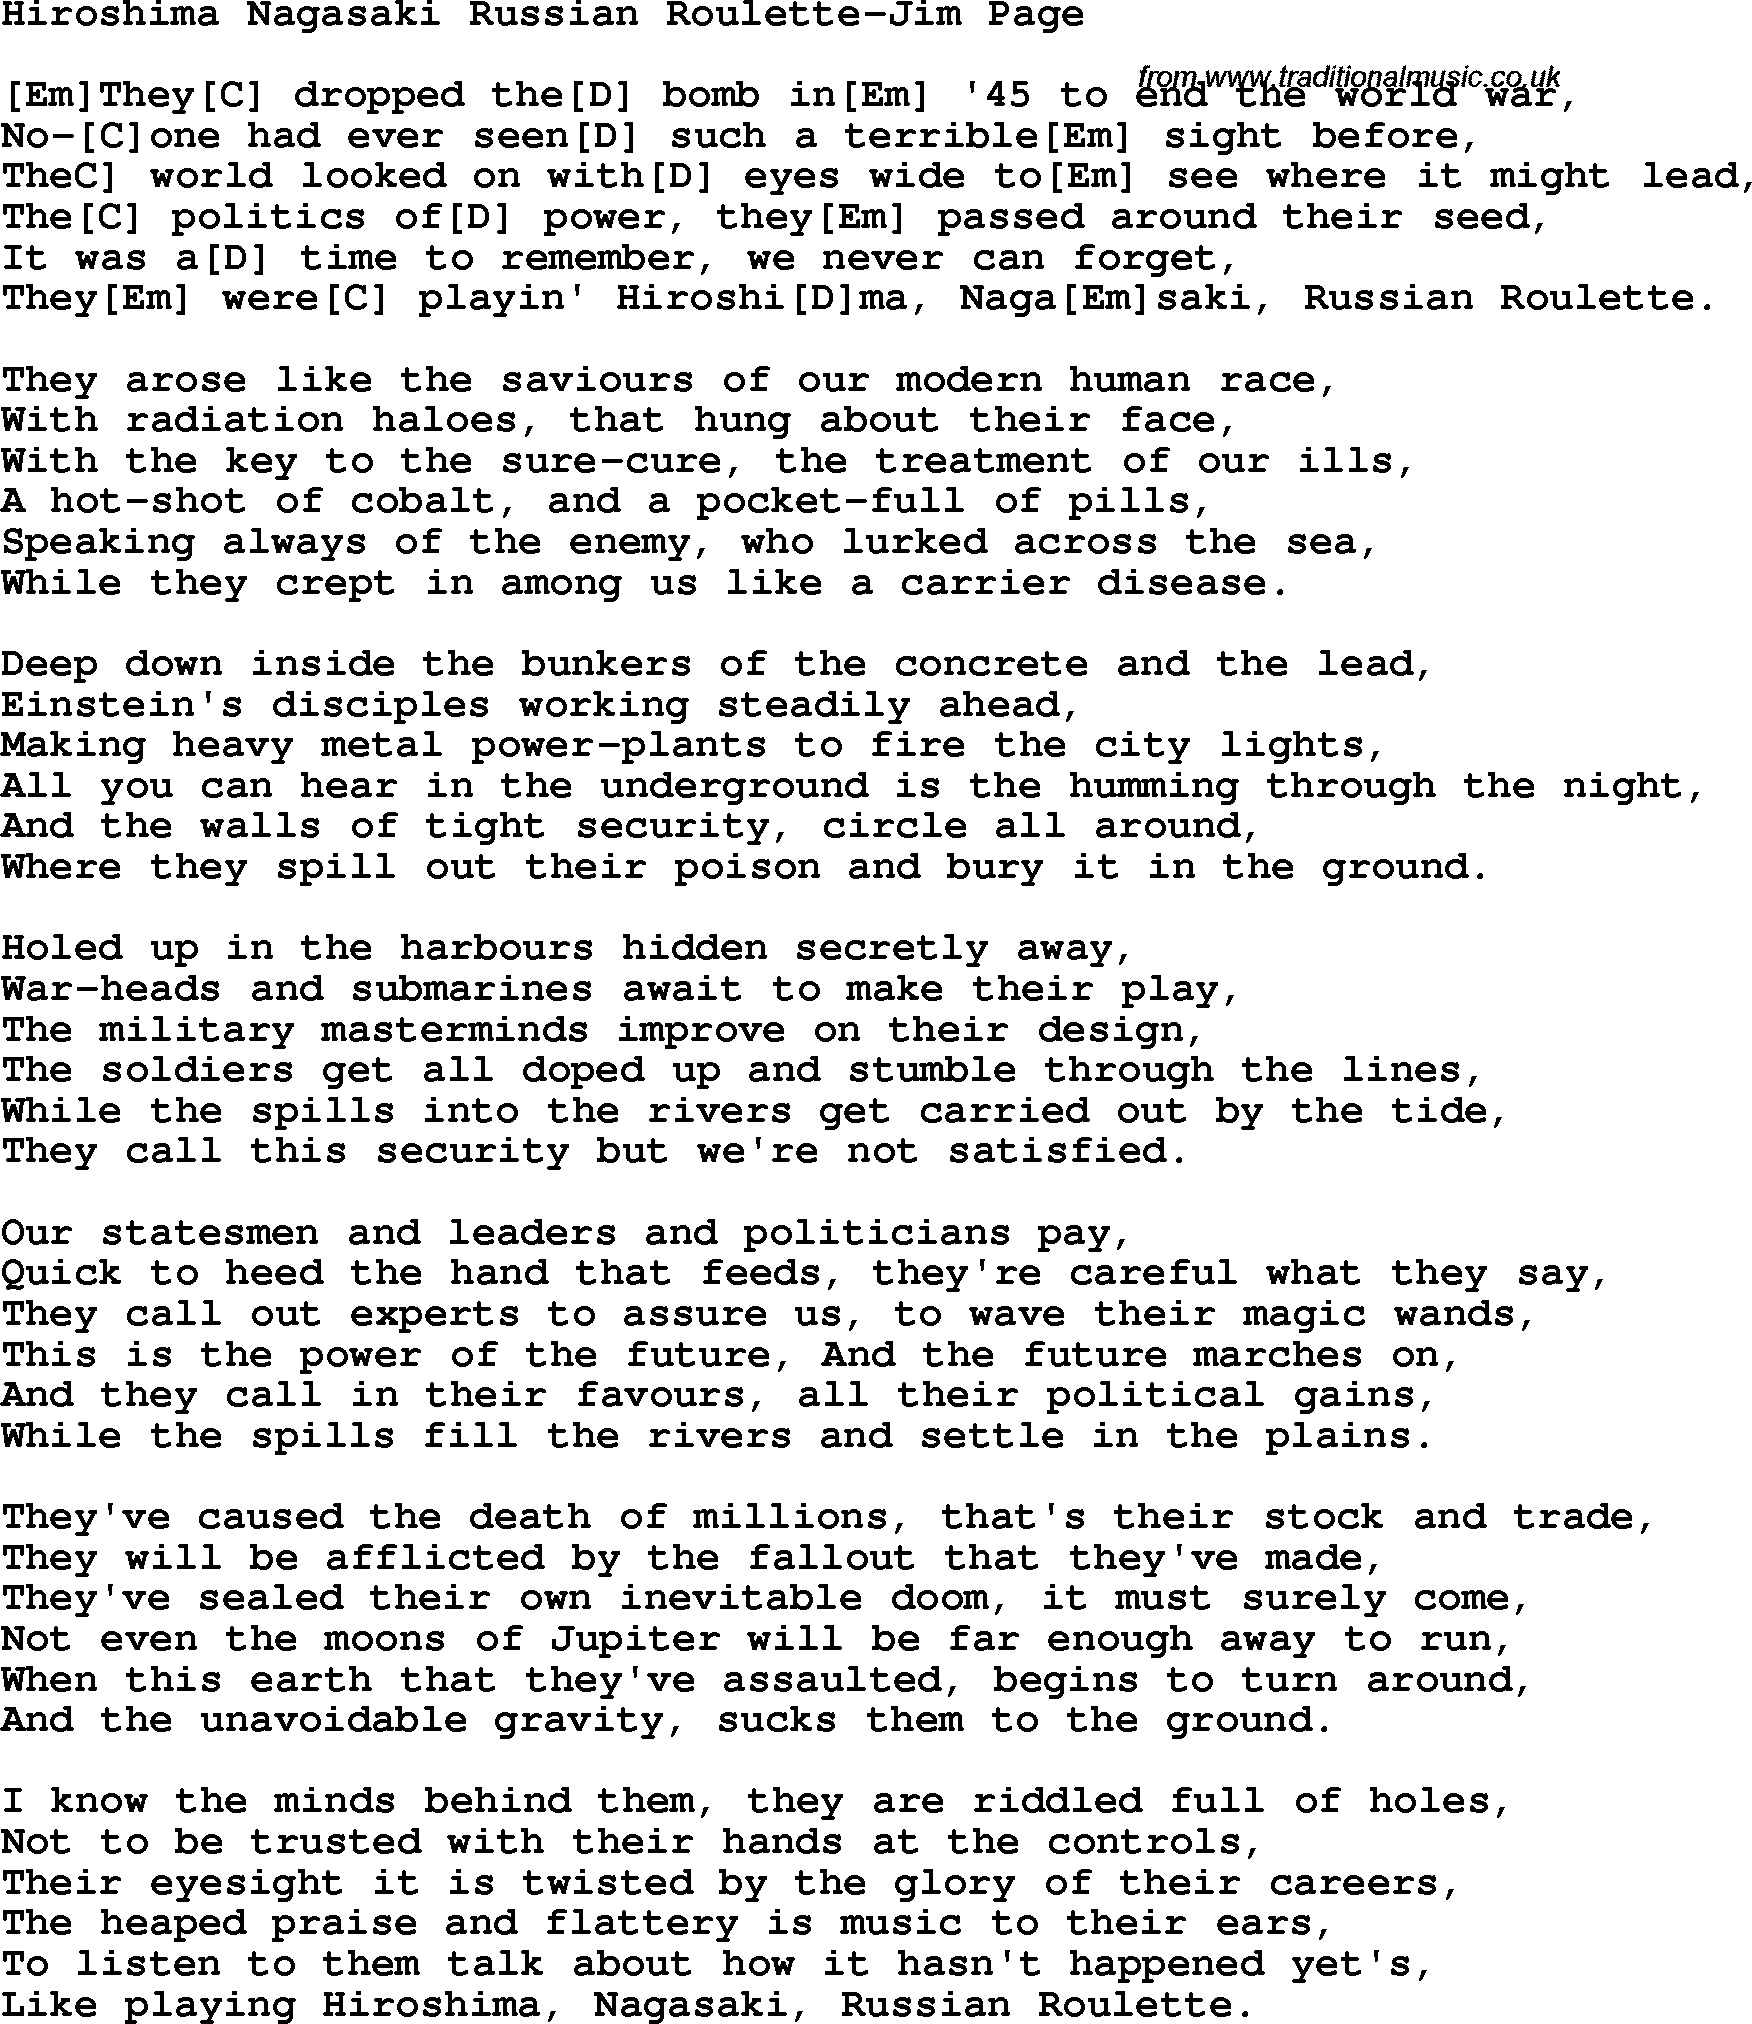 Protest song: Hiroshima Nagasaki Russian Roulette-Jim Page lyrics